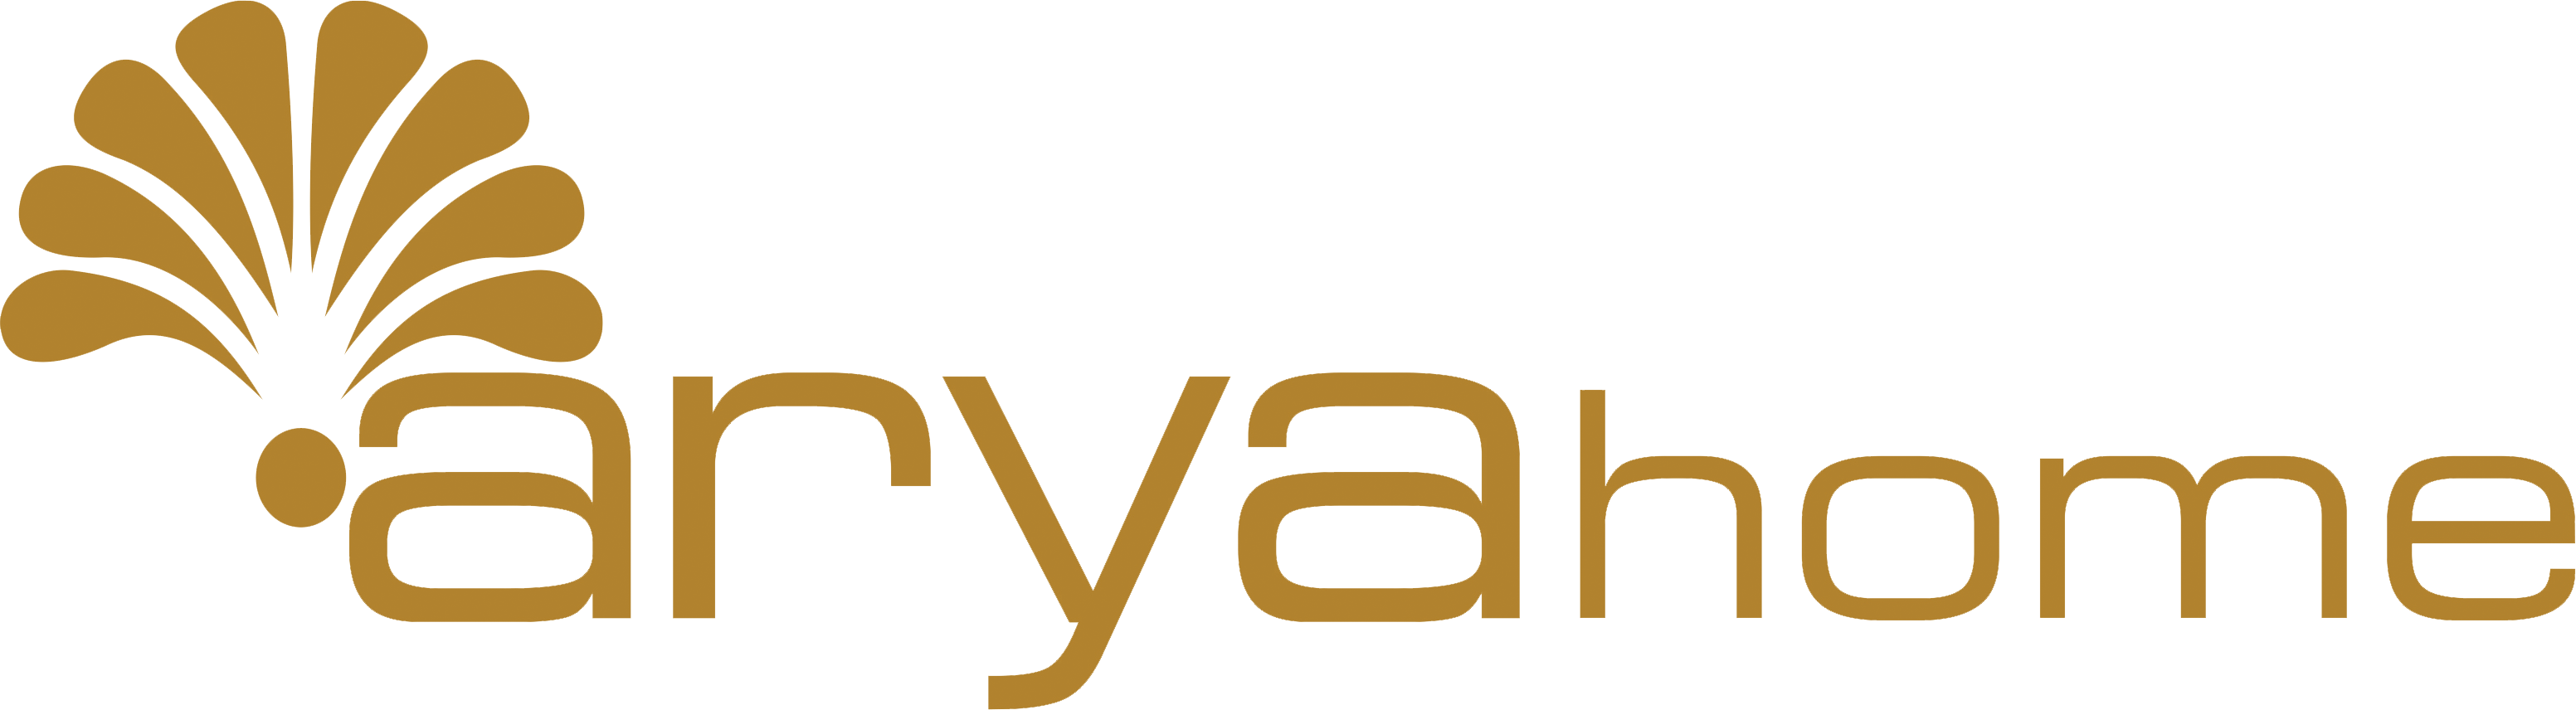 Ариа хоум. Arya Home логотип. Логотип Arya Home ткани. Ария хоум. Логотип Ария текстиль.